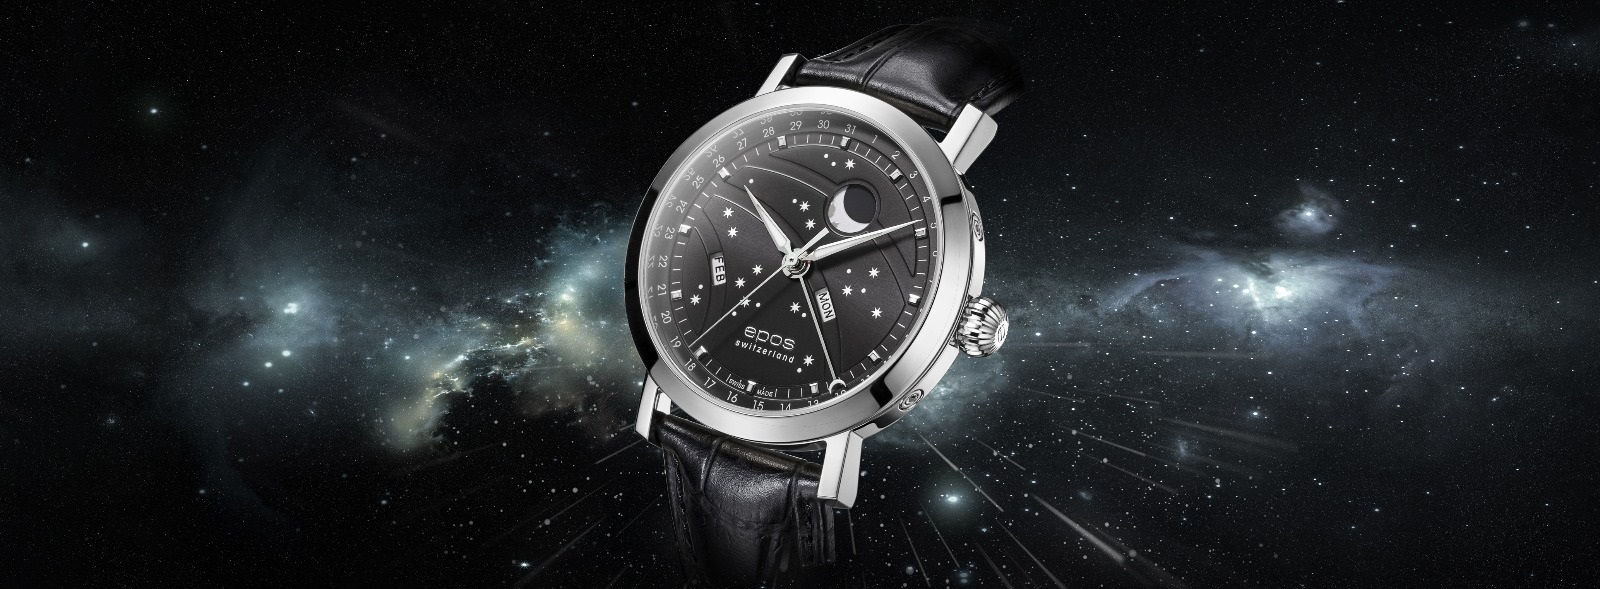 Zegarki inspirowane kosmosem. Epos North Star i Epos Big Moon